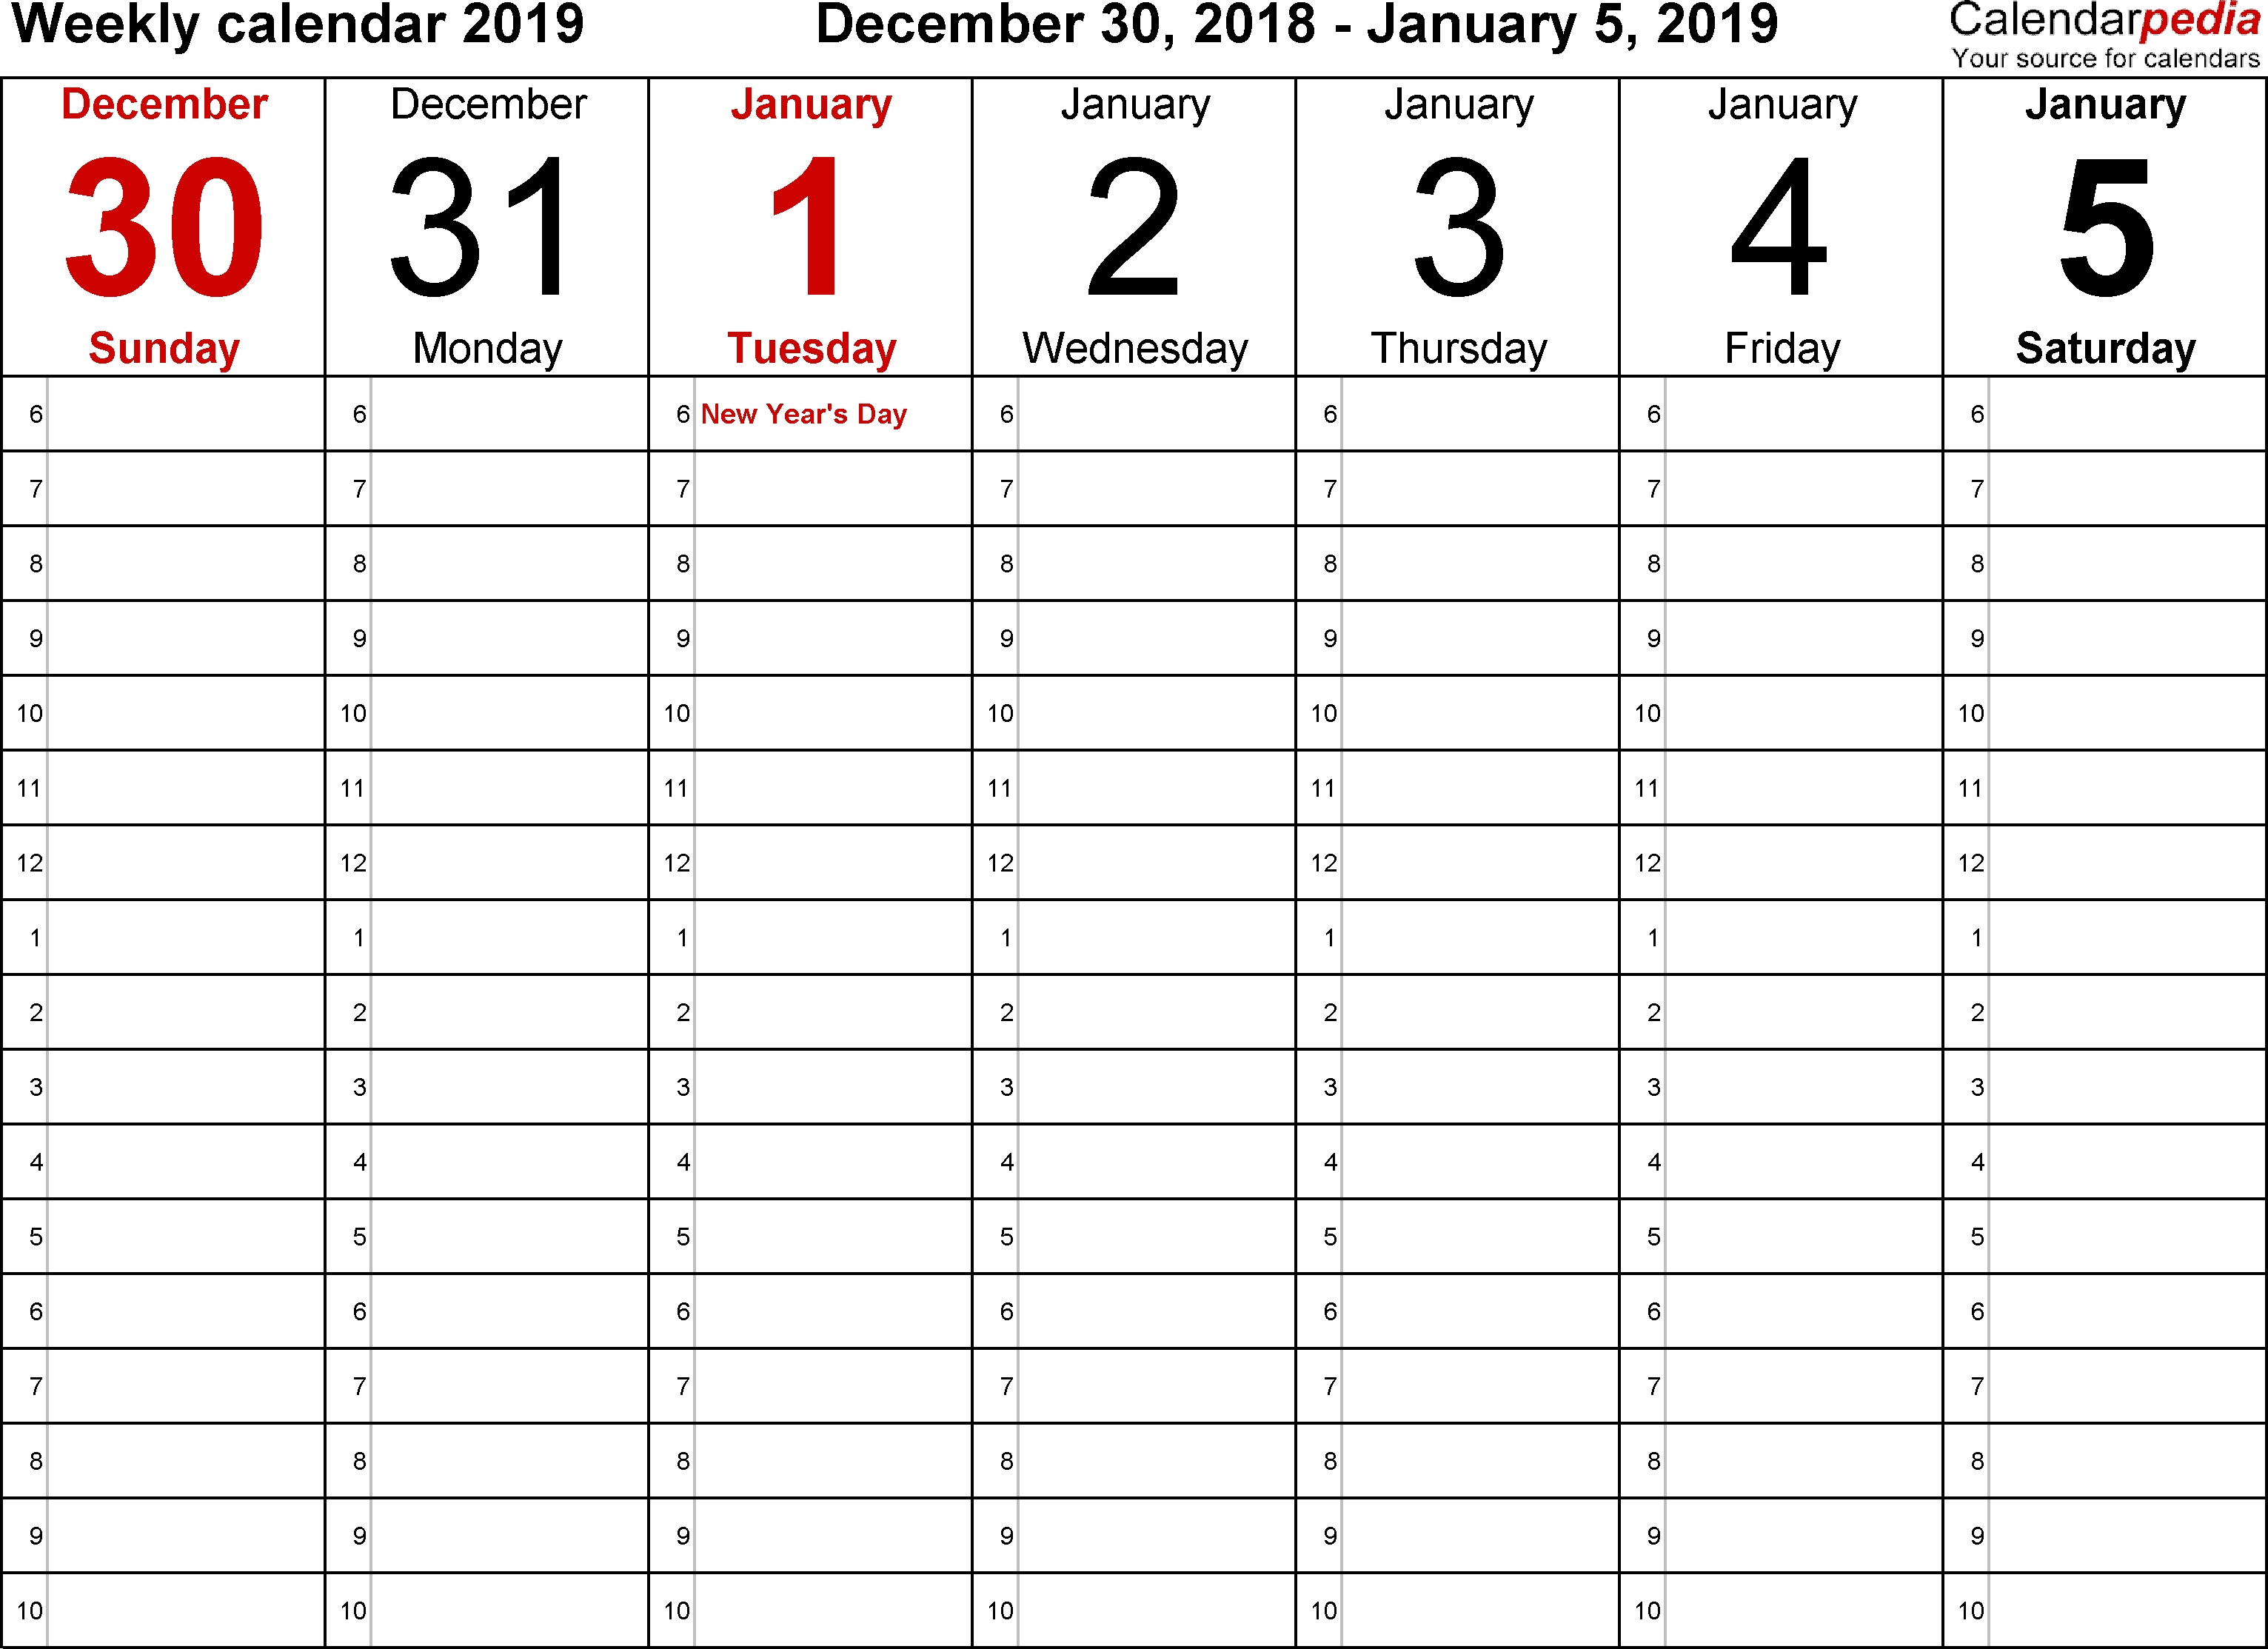 Blank Calendar With Times Weekly Es Free Printable Time Slots Daily within Free Printable Weekly Calendar With Time Slots